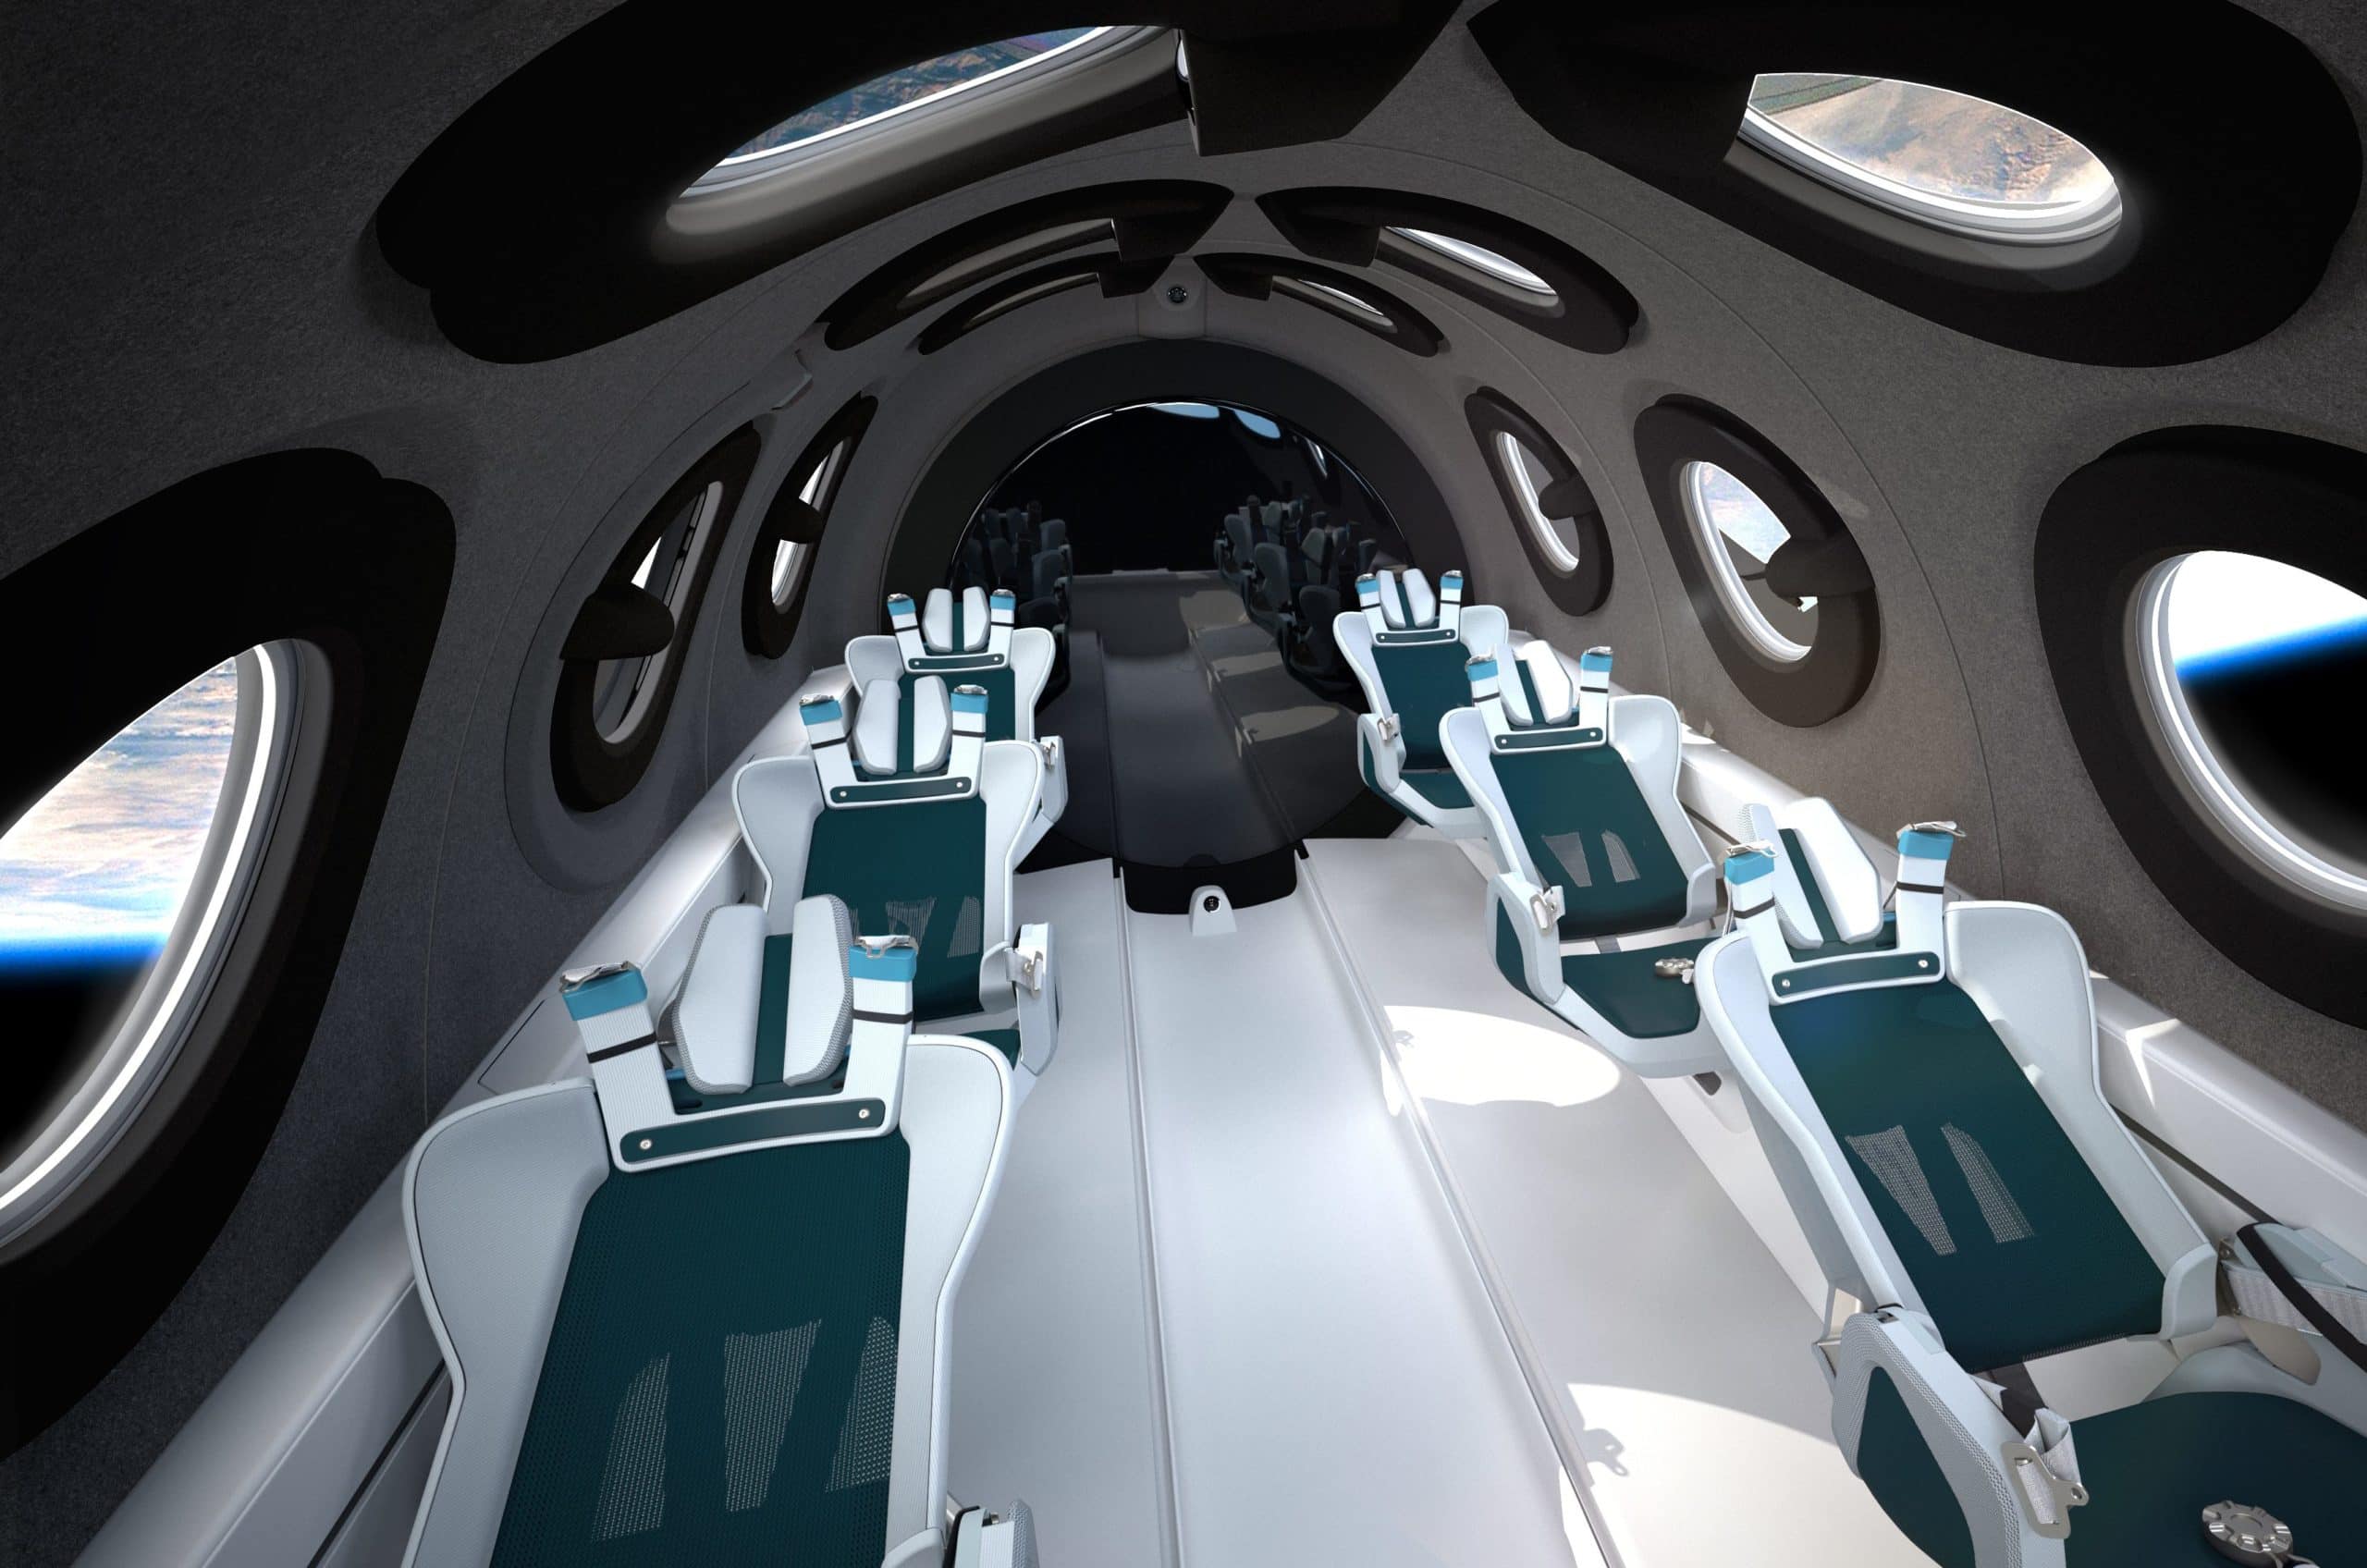 Virgin Galactic SpaceshipTwo Cabin Interior In Space